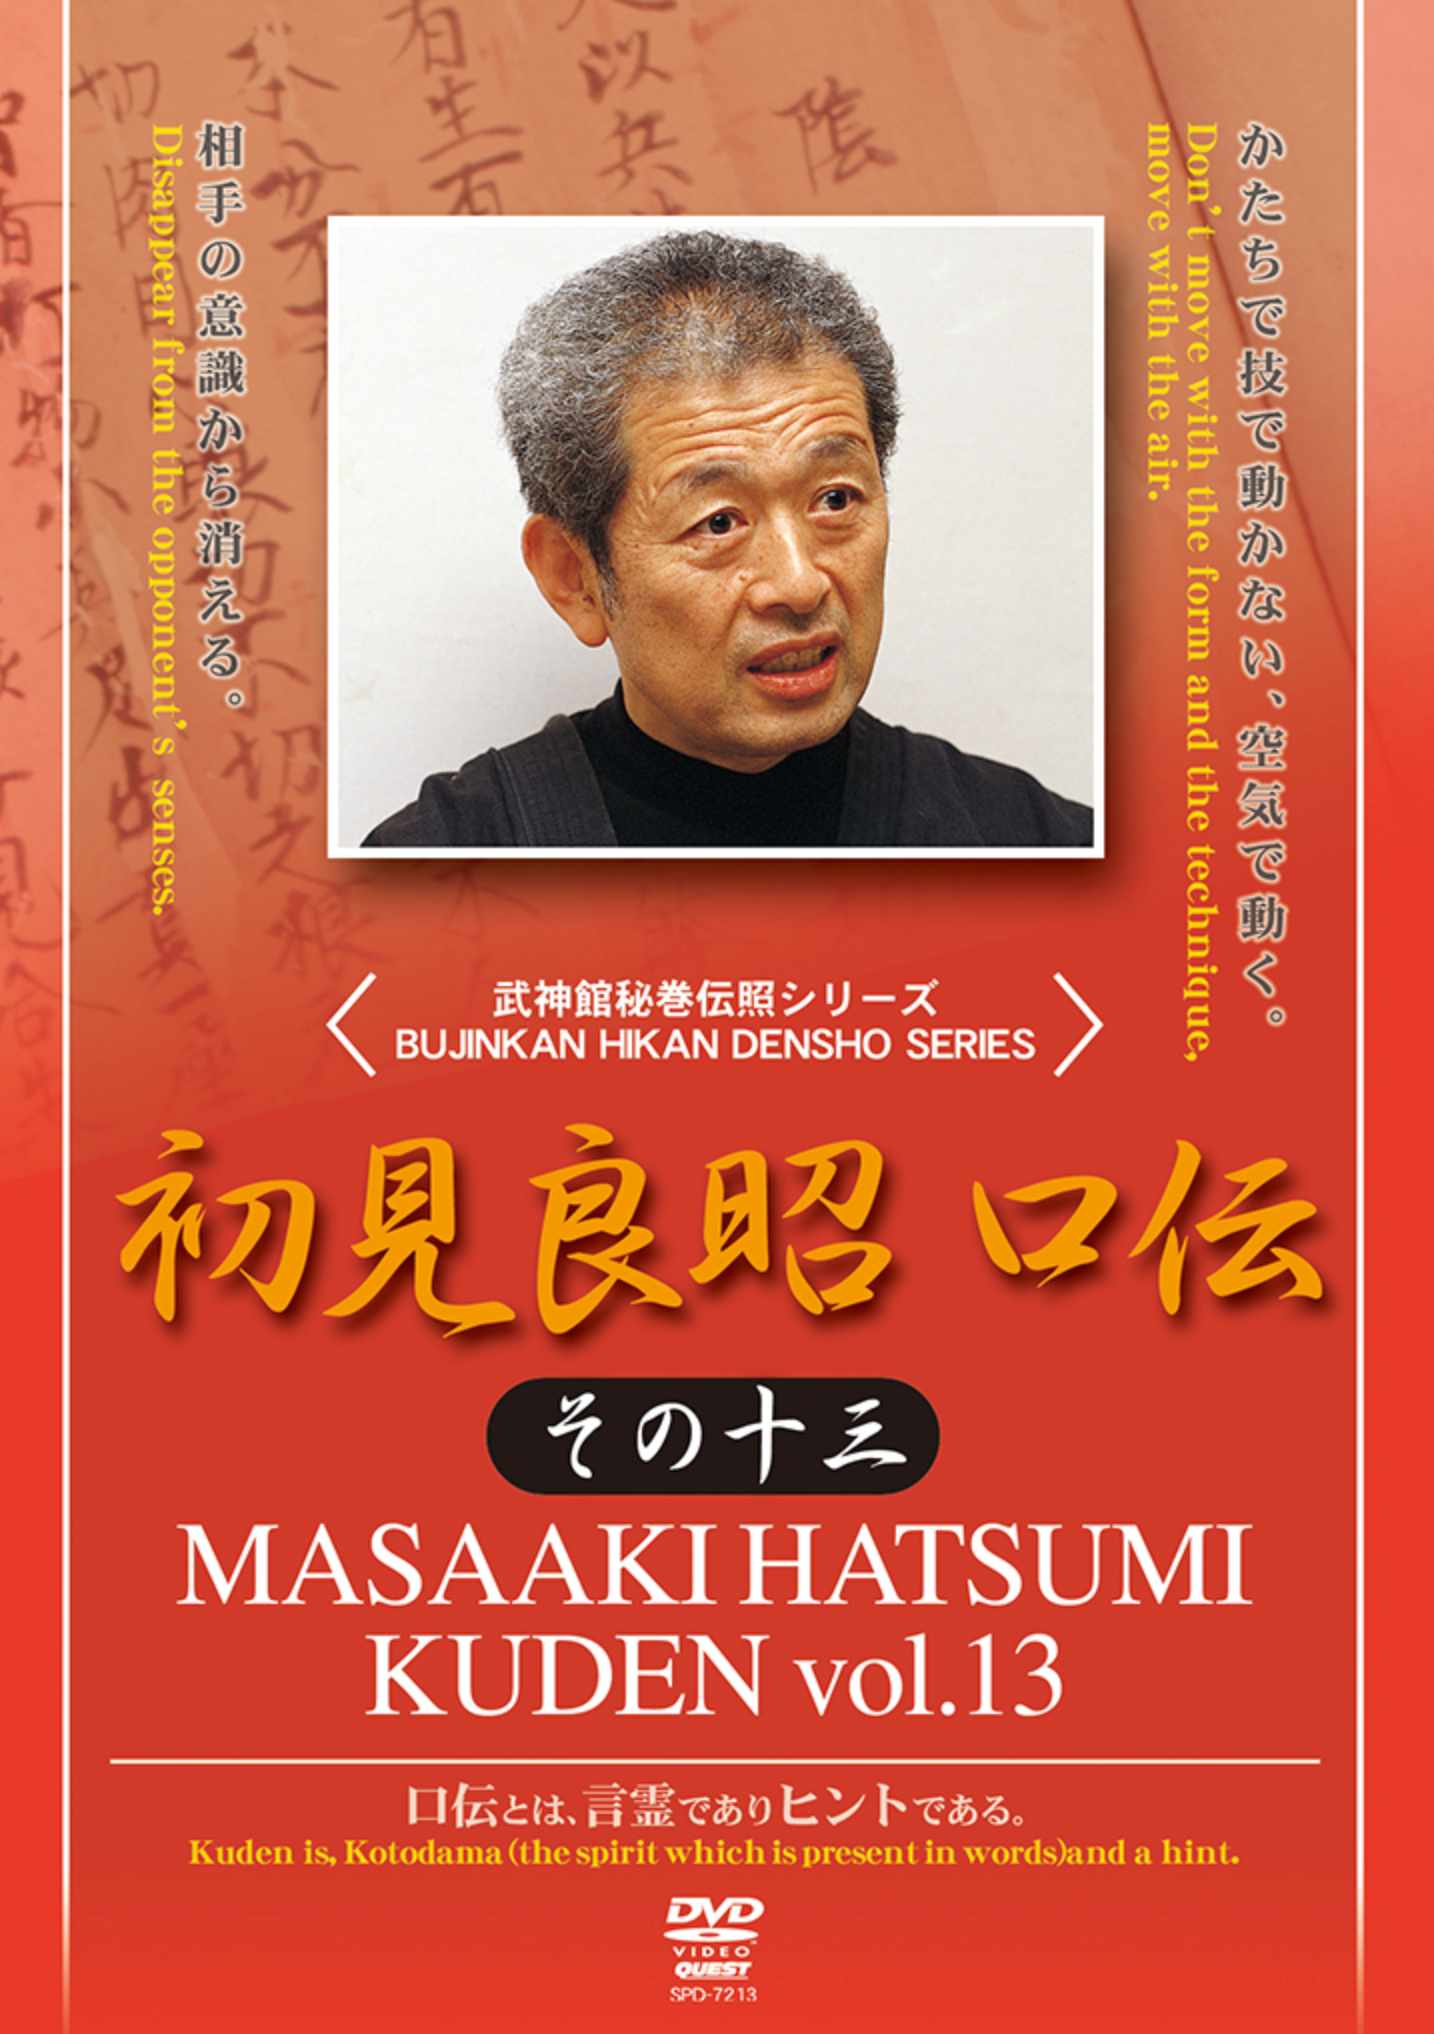 Kuden Vol 13 DVD with Masaaki Hatsumi - Budovideos Inc